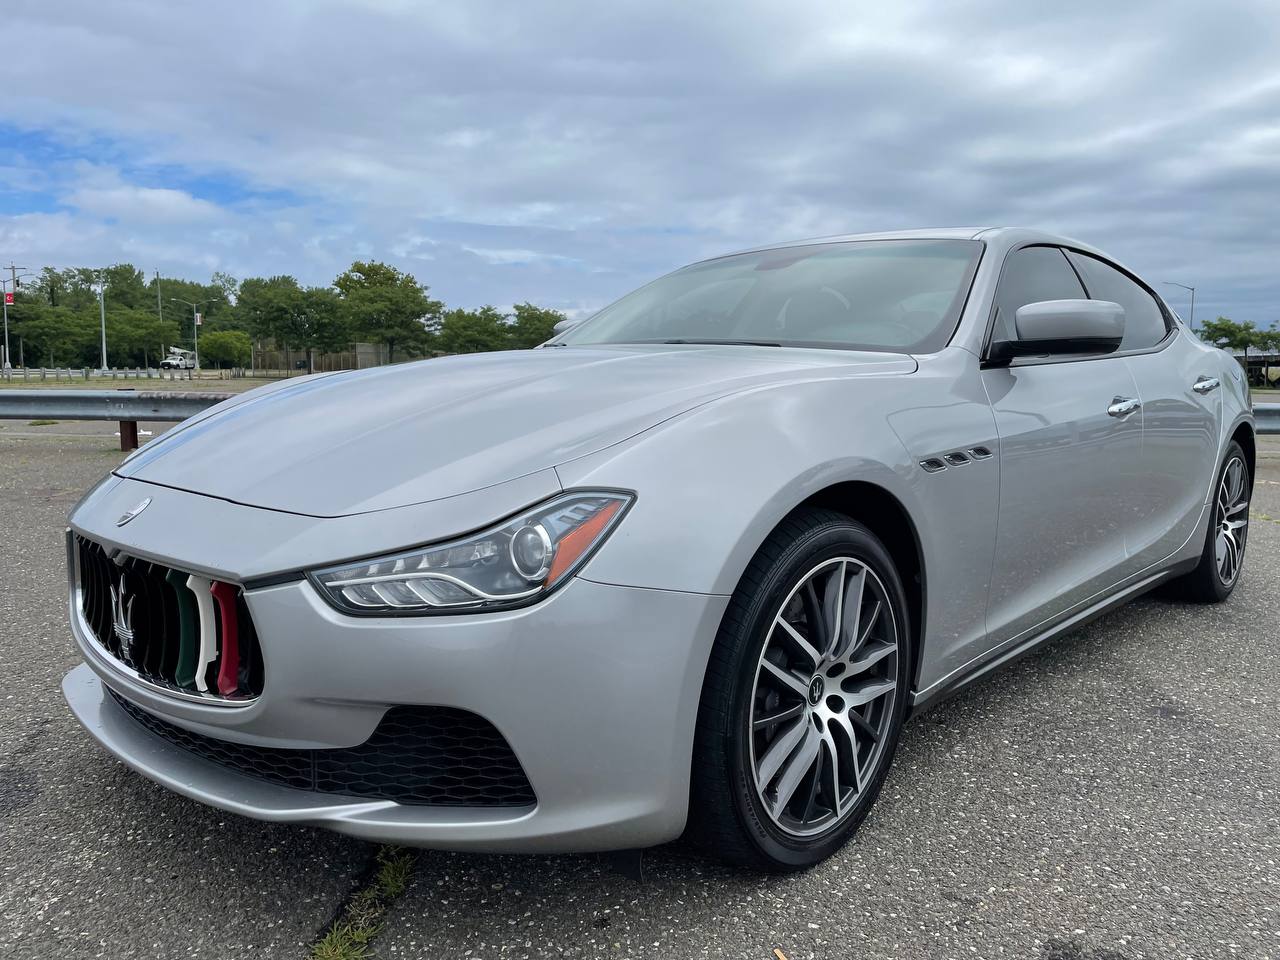 Used Car - 2015 Maserati Ghibli for Sale in Staten Island, NY